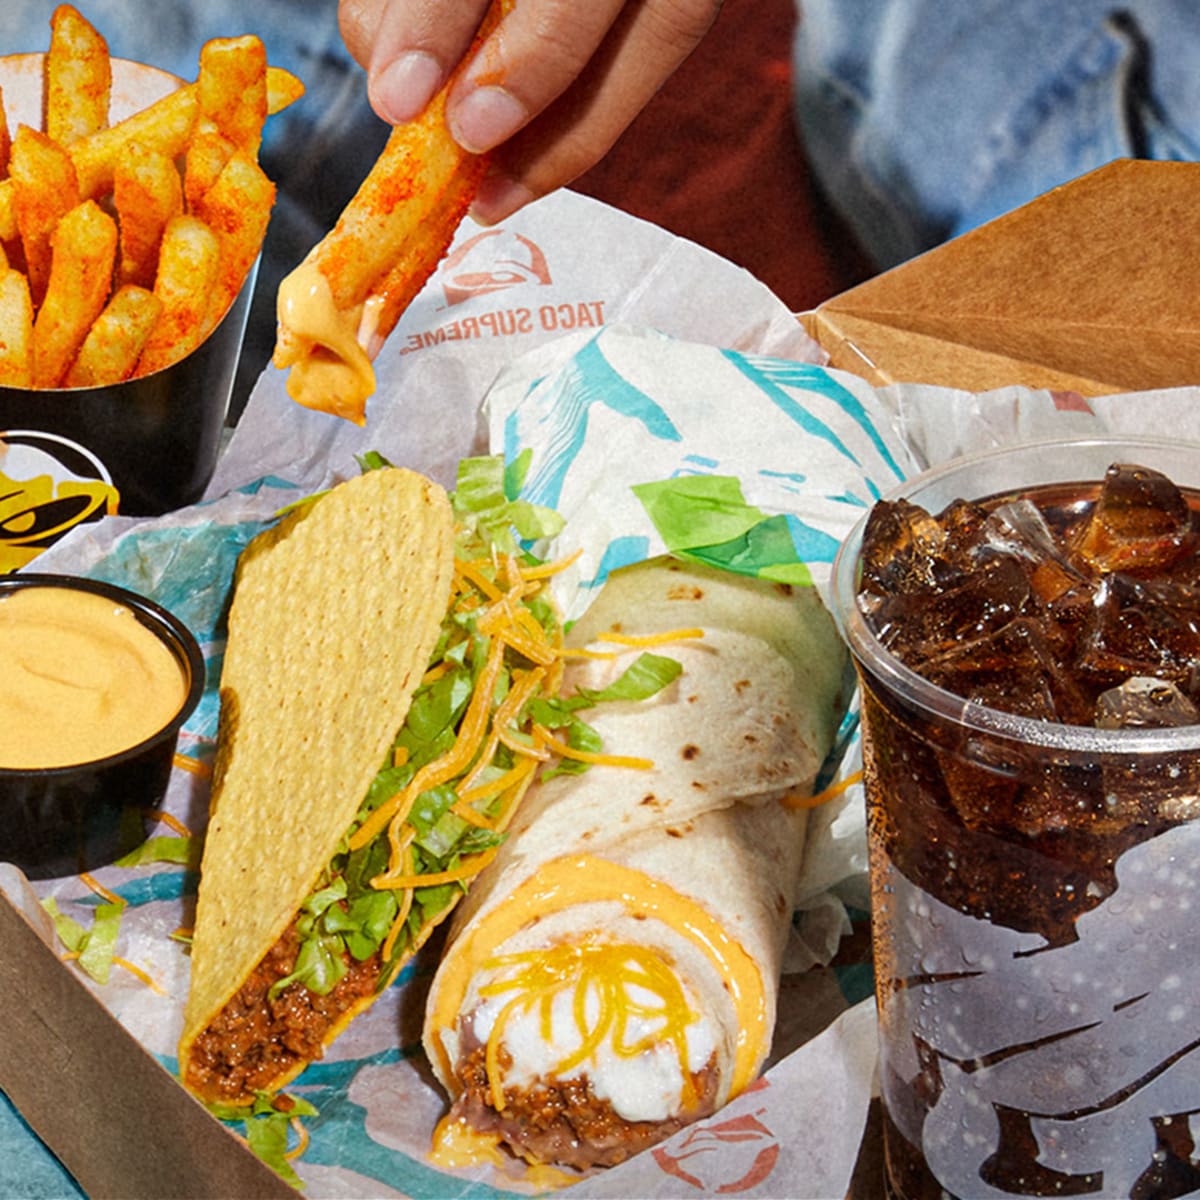 Taco Bell is bringing back Nacho Fries